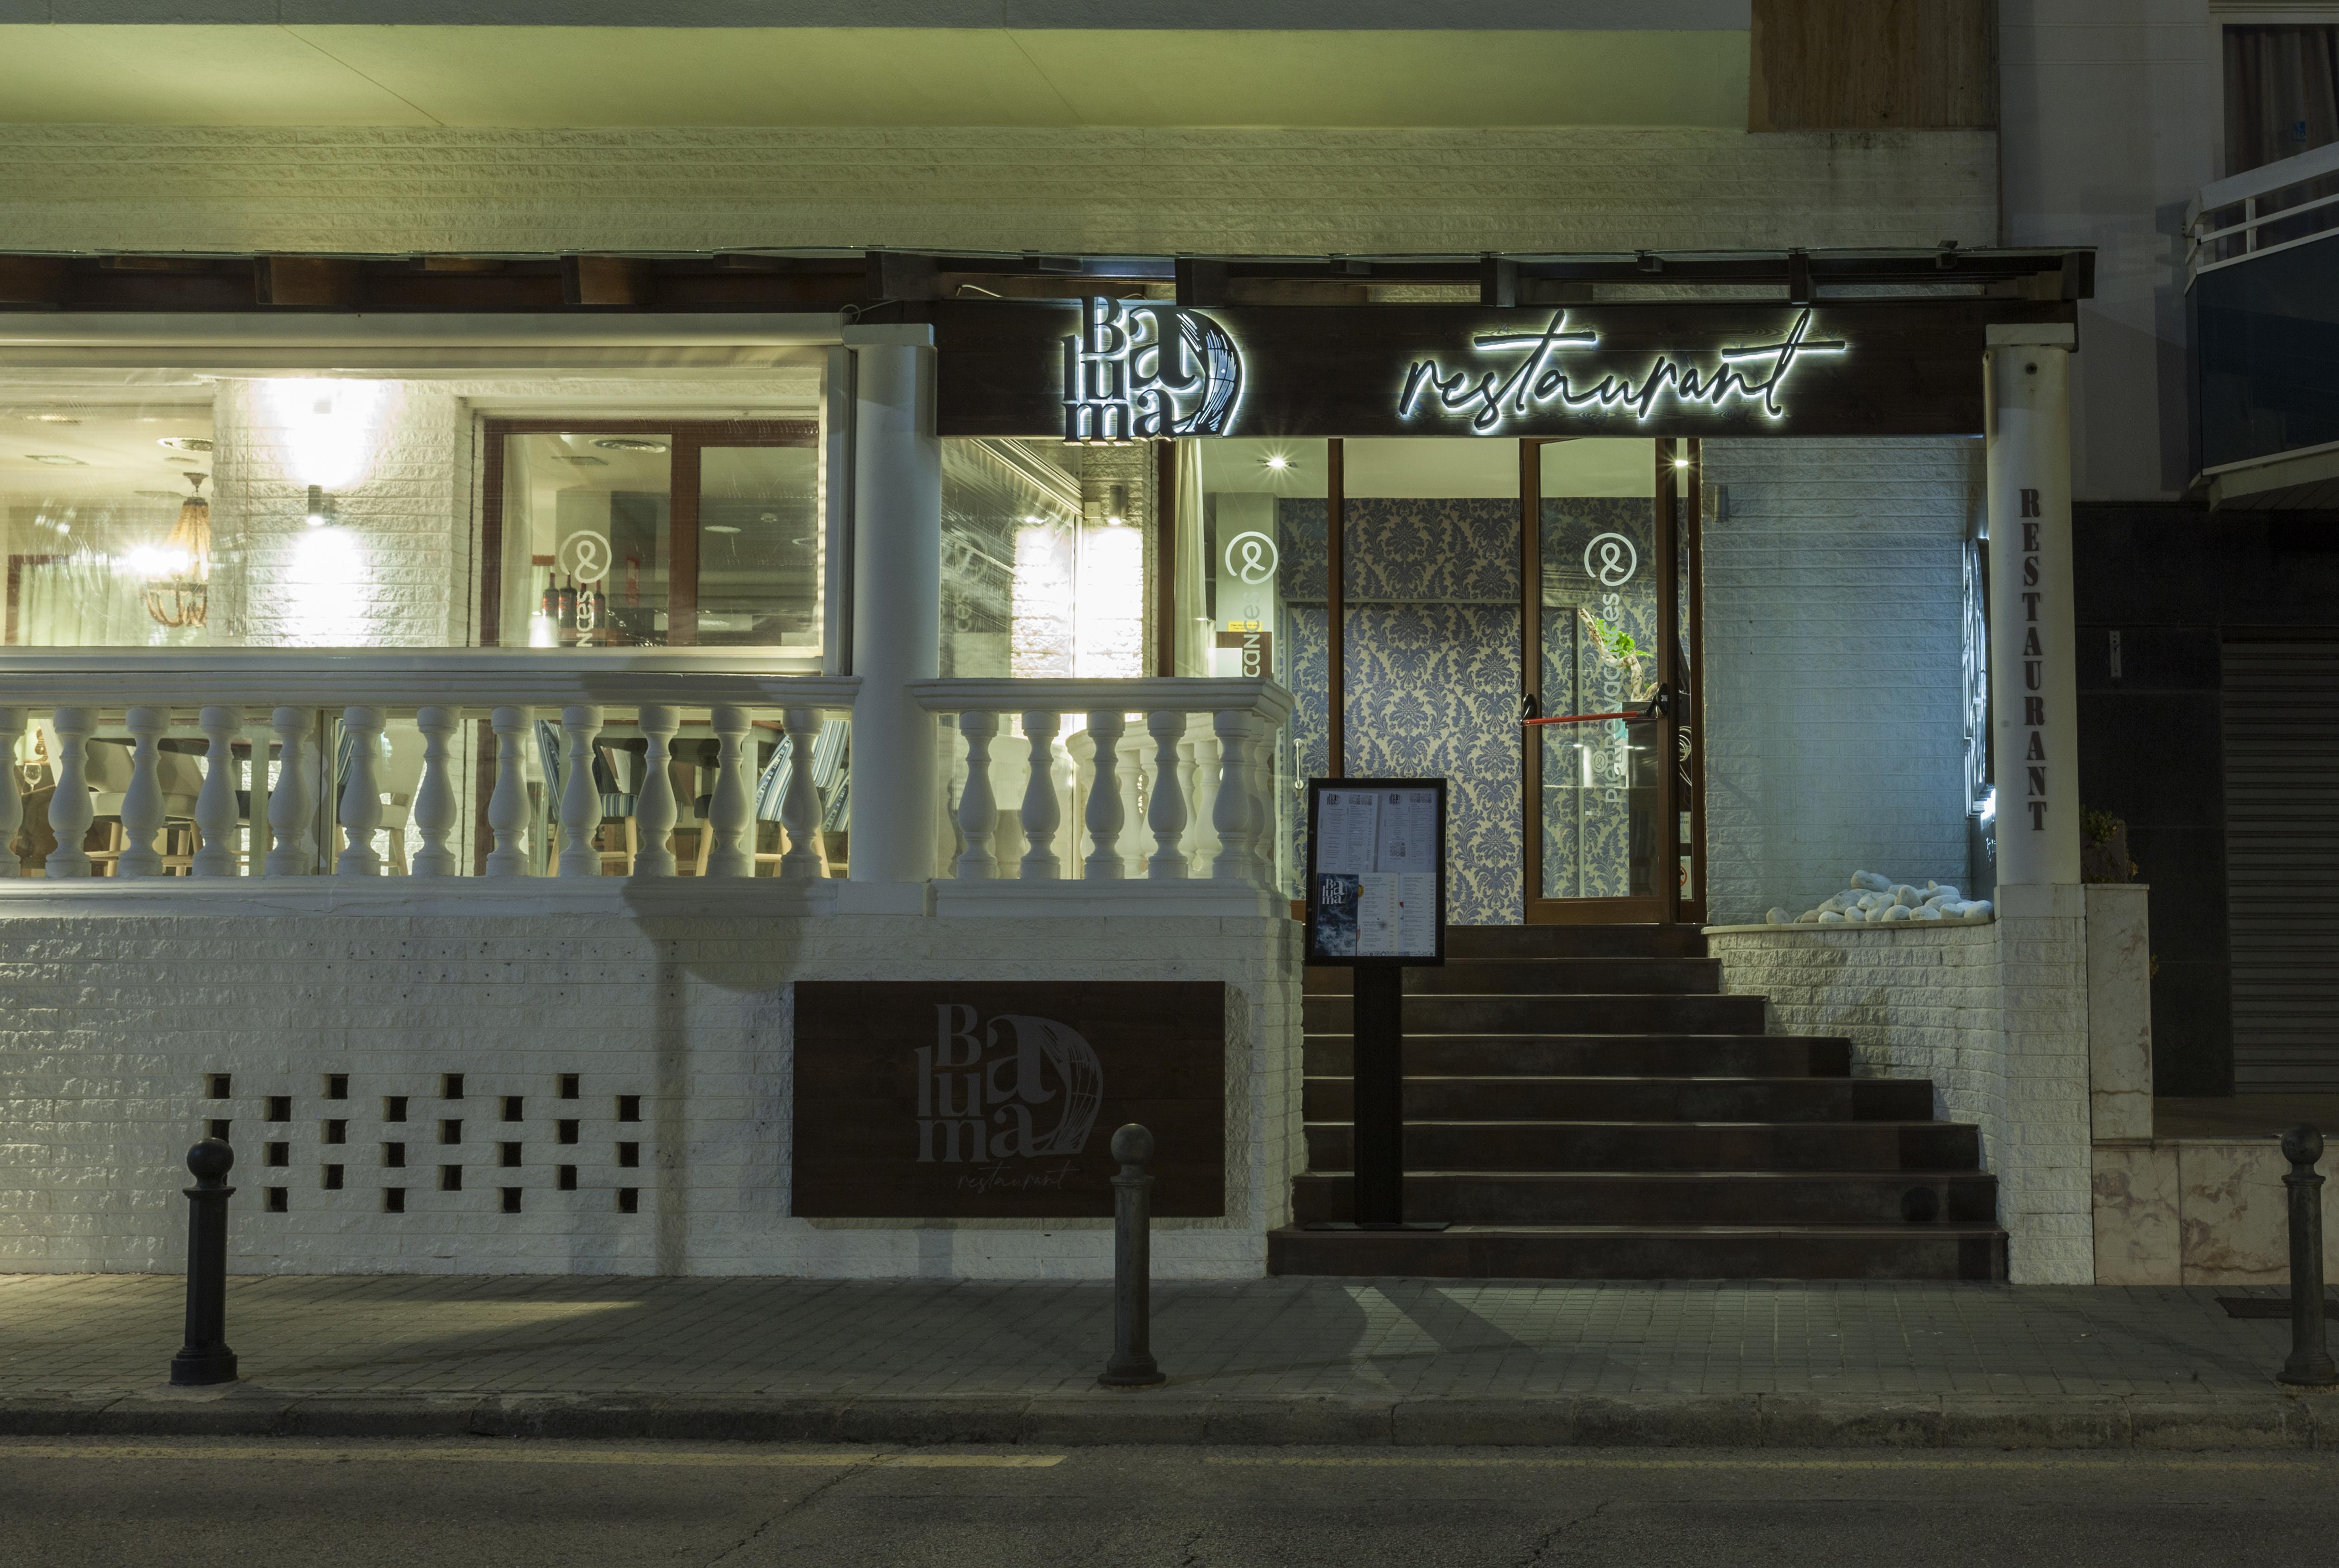 Hotel Horitzo By Pierre & Vacances Blanes Exterior foto